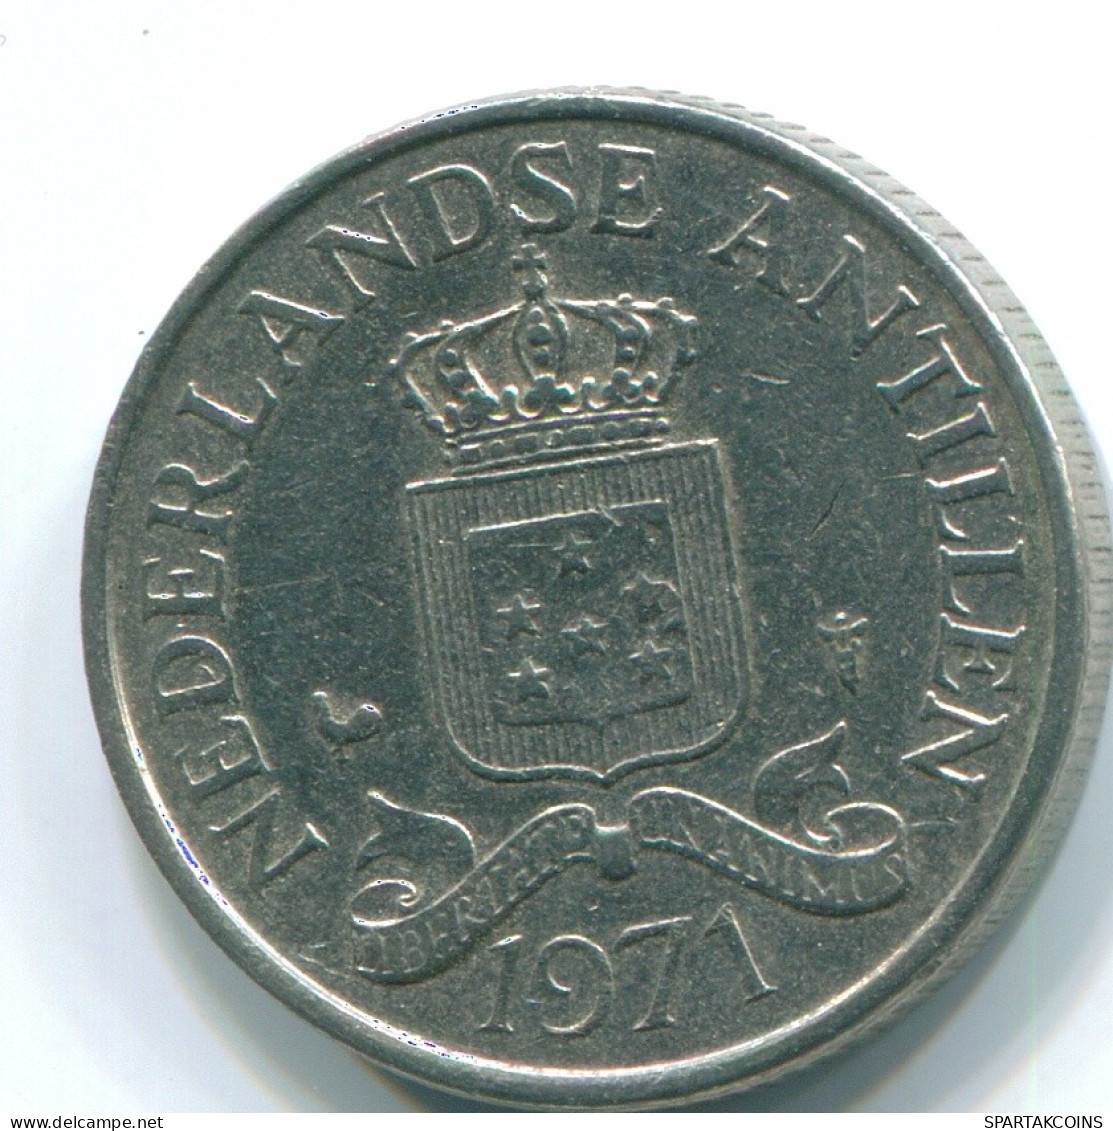 25 CENTS 1971 NIEDERLÄNDISCHE ANTILLEN Nickel Koloniale Münze #S11491.D.A - Netherlands Antilles